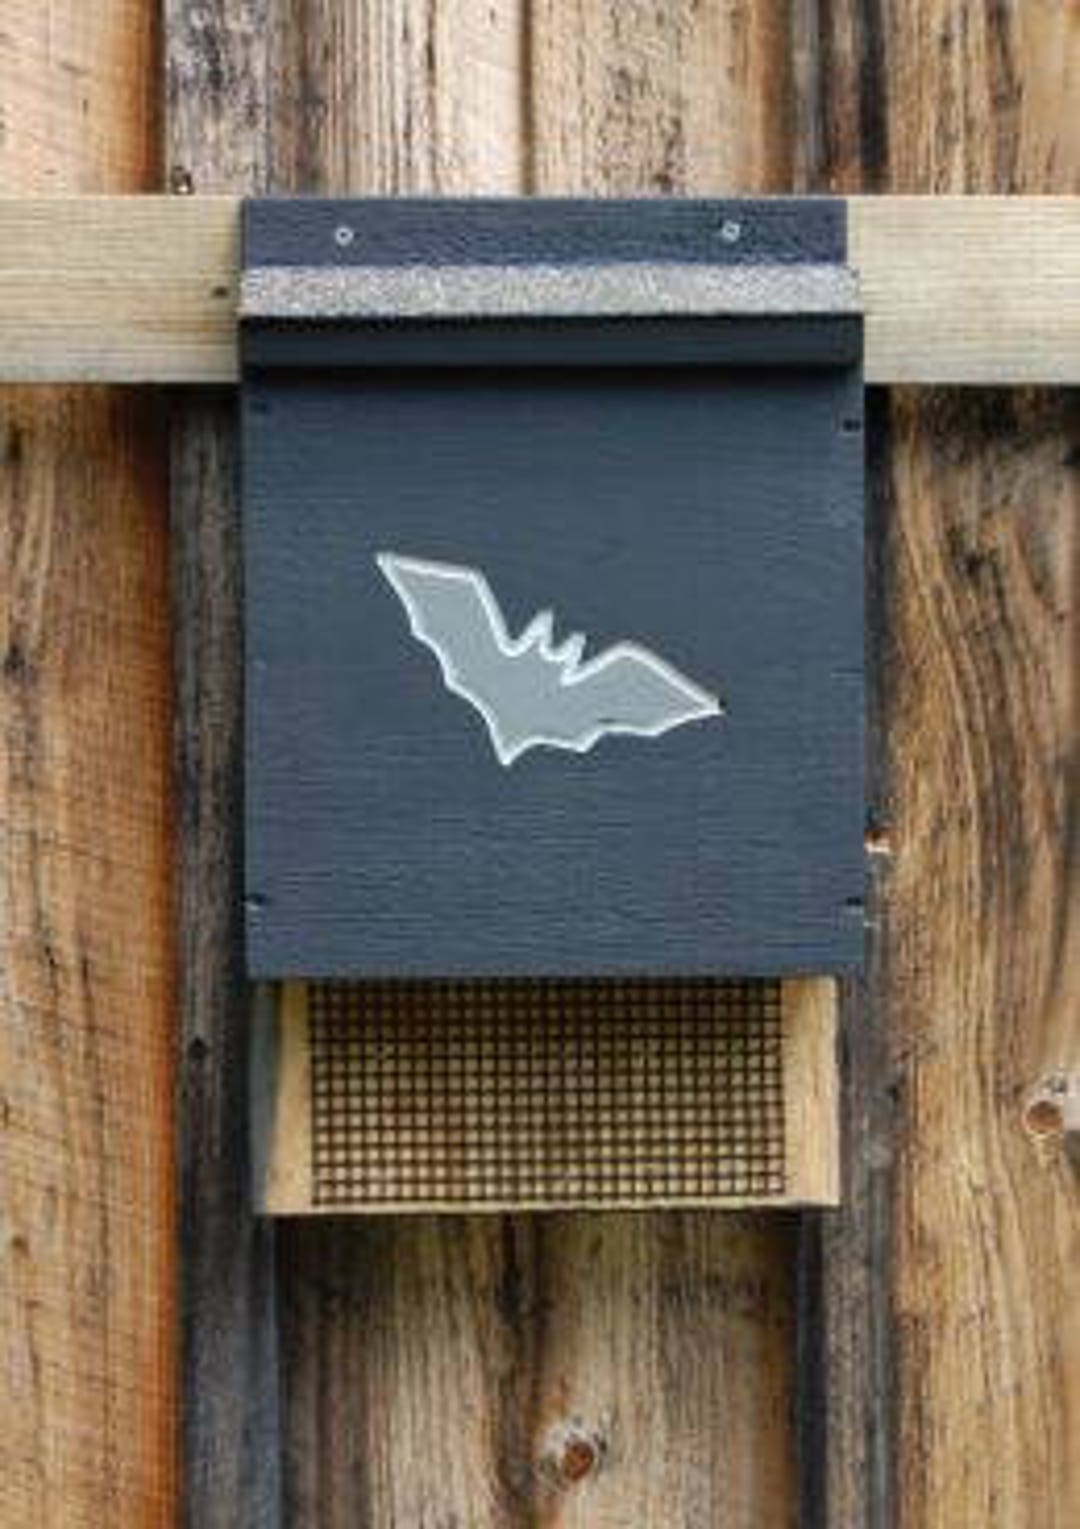 DIY Corian Pottery Wheel Bats